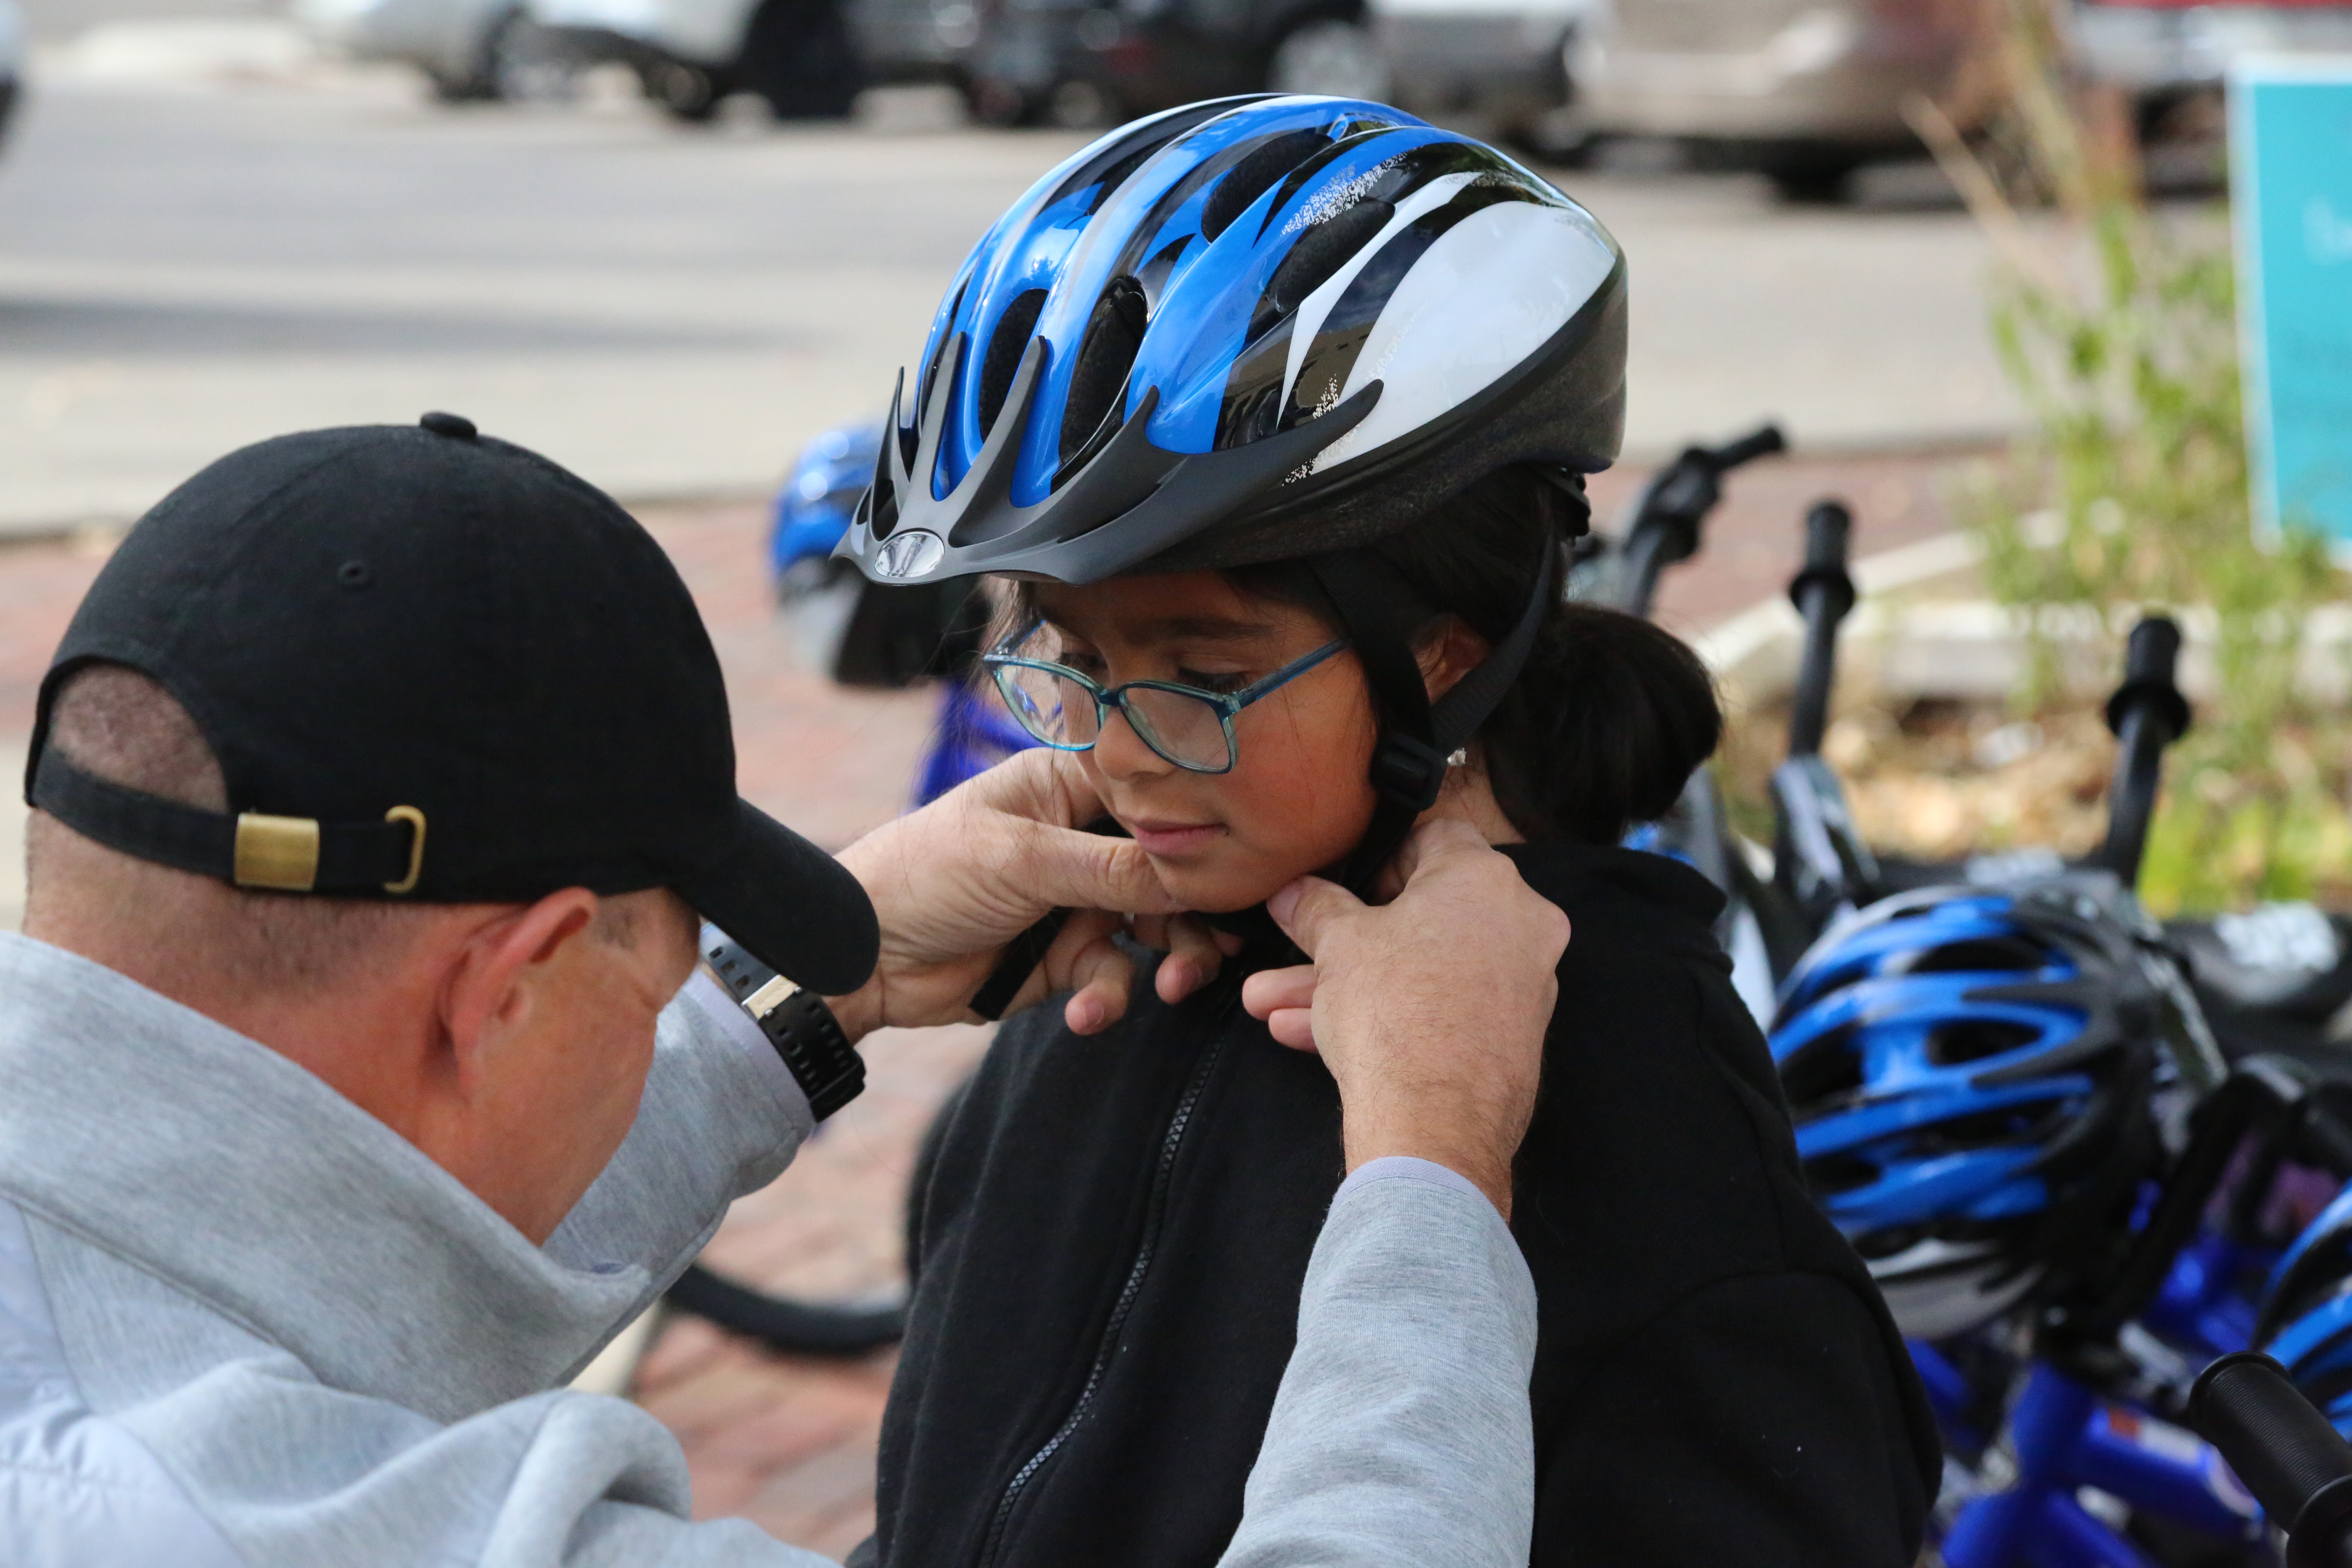 A Harris Elementary student gets help with adjusting her bike helmet.